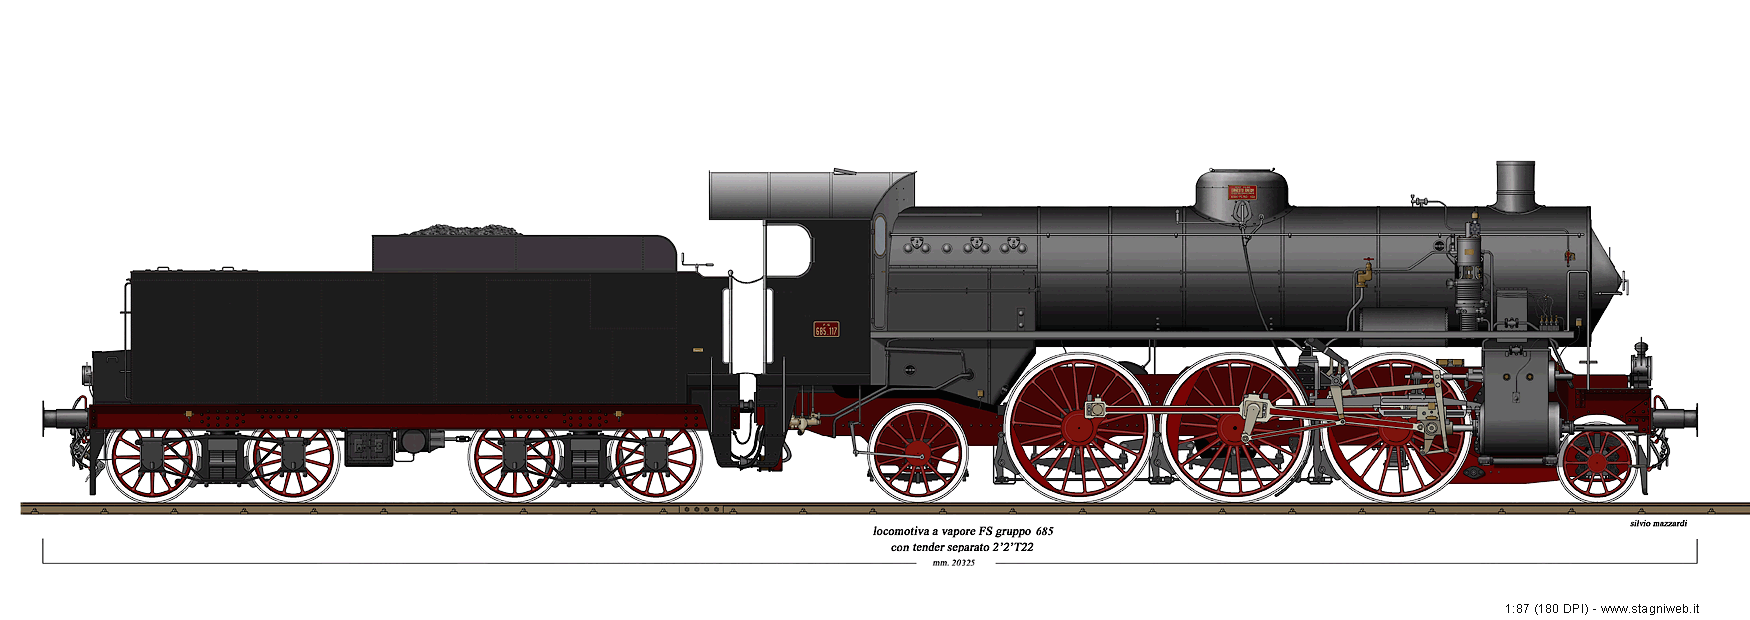 Locomotive a vapore - Gr. 685